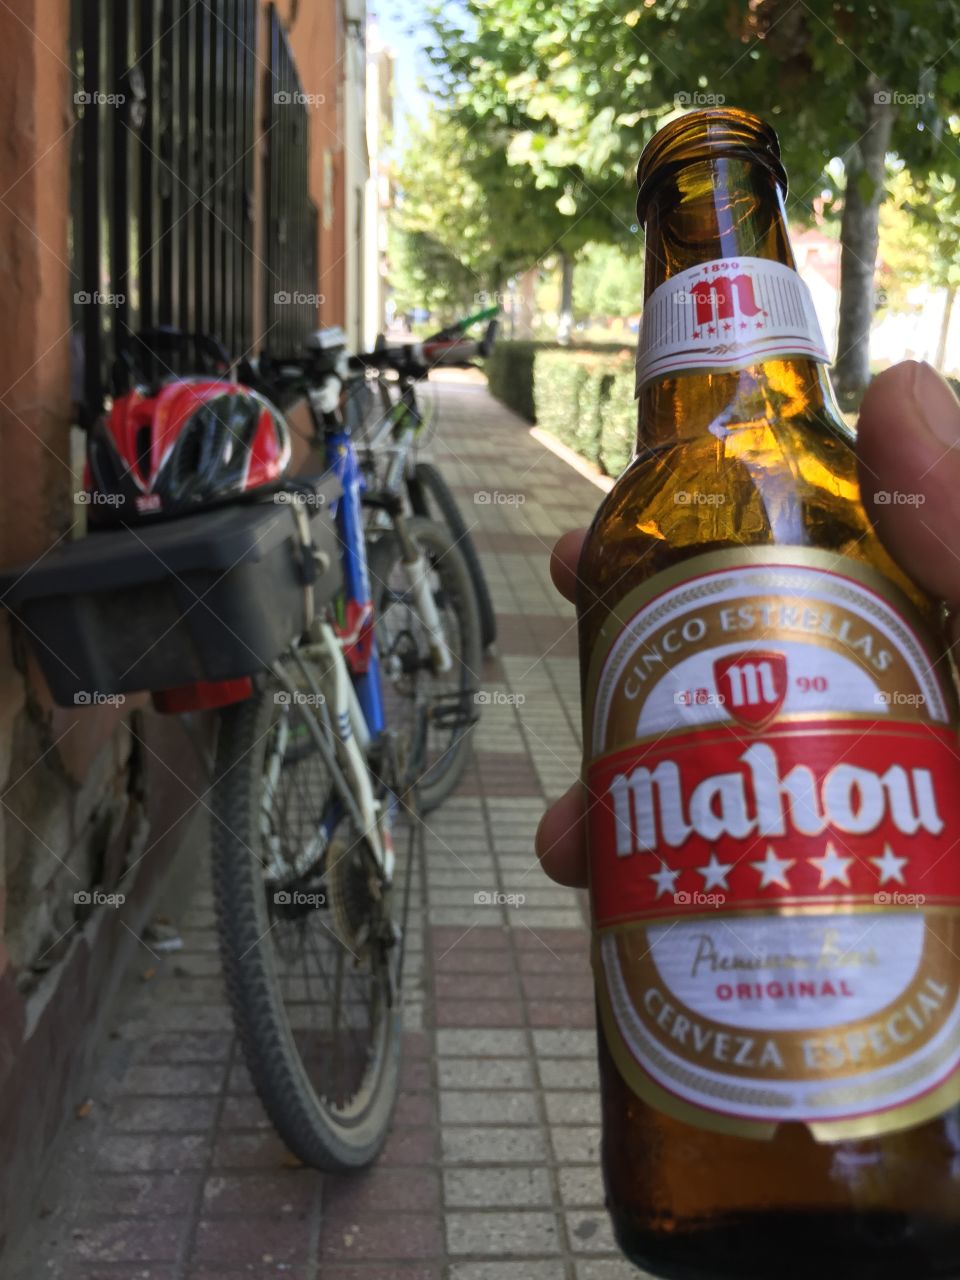 Bier and bike